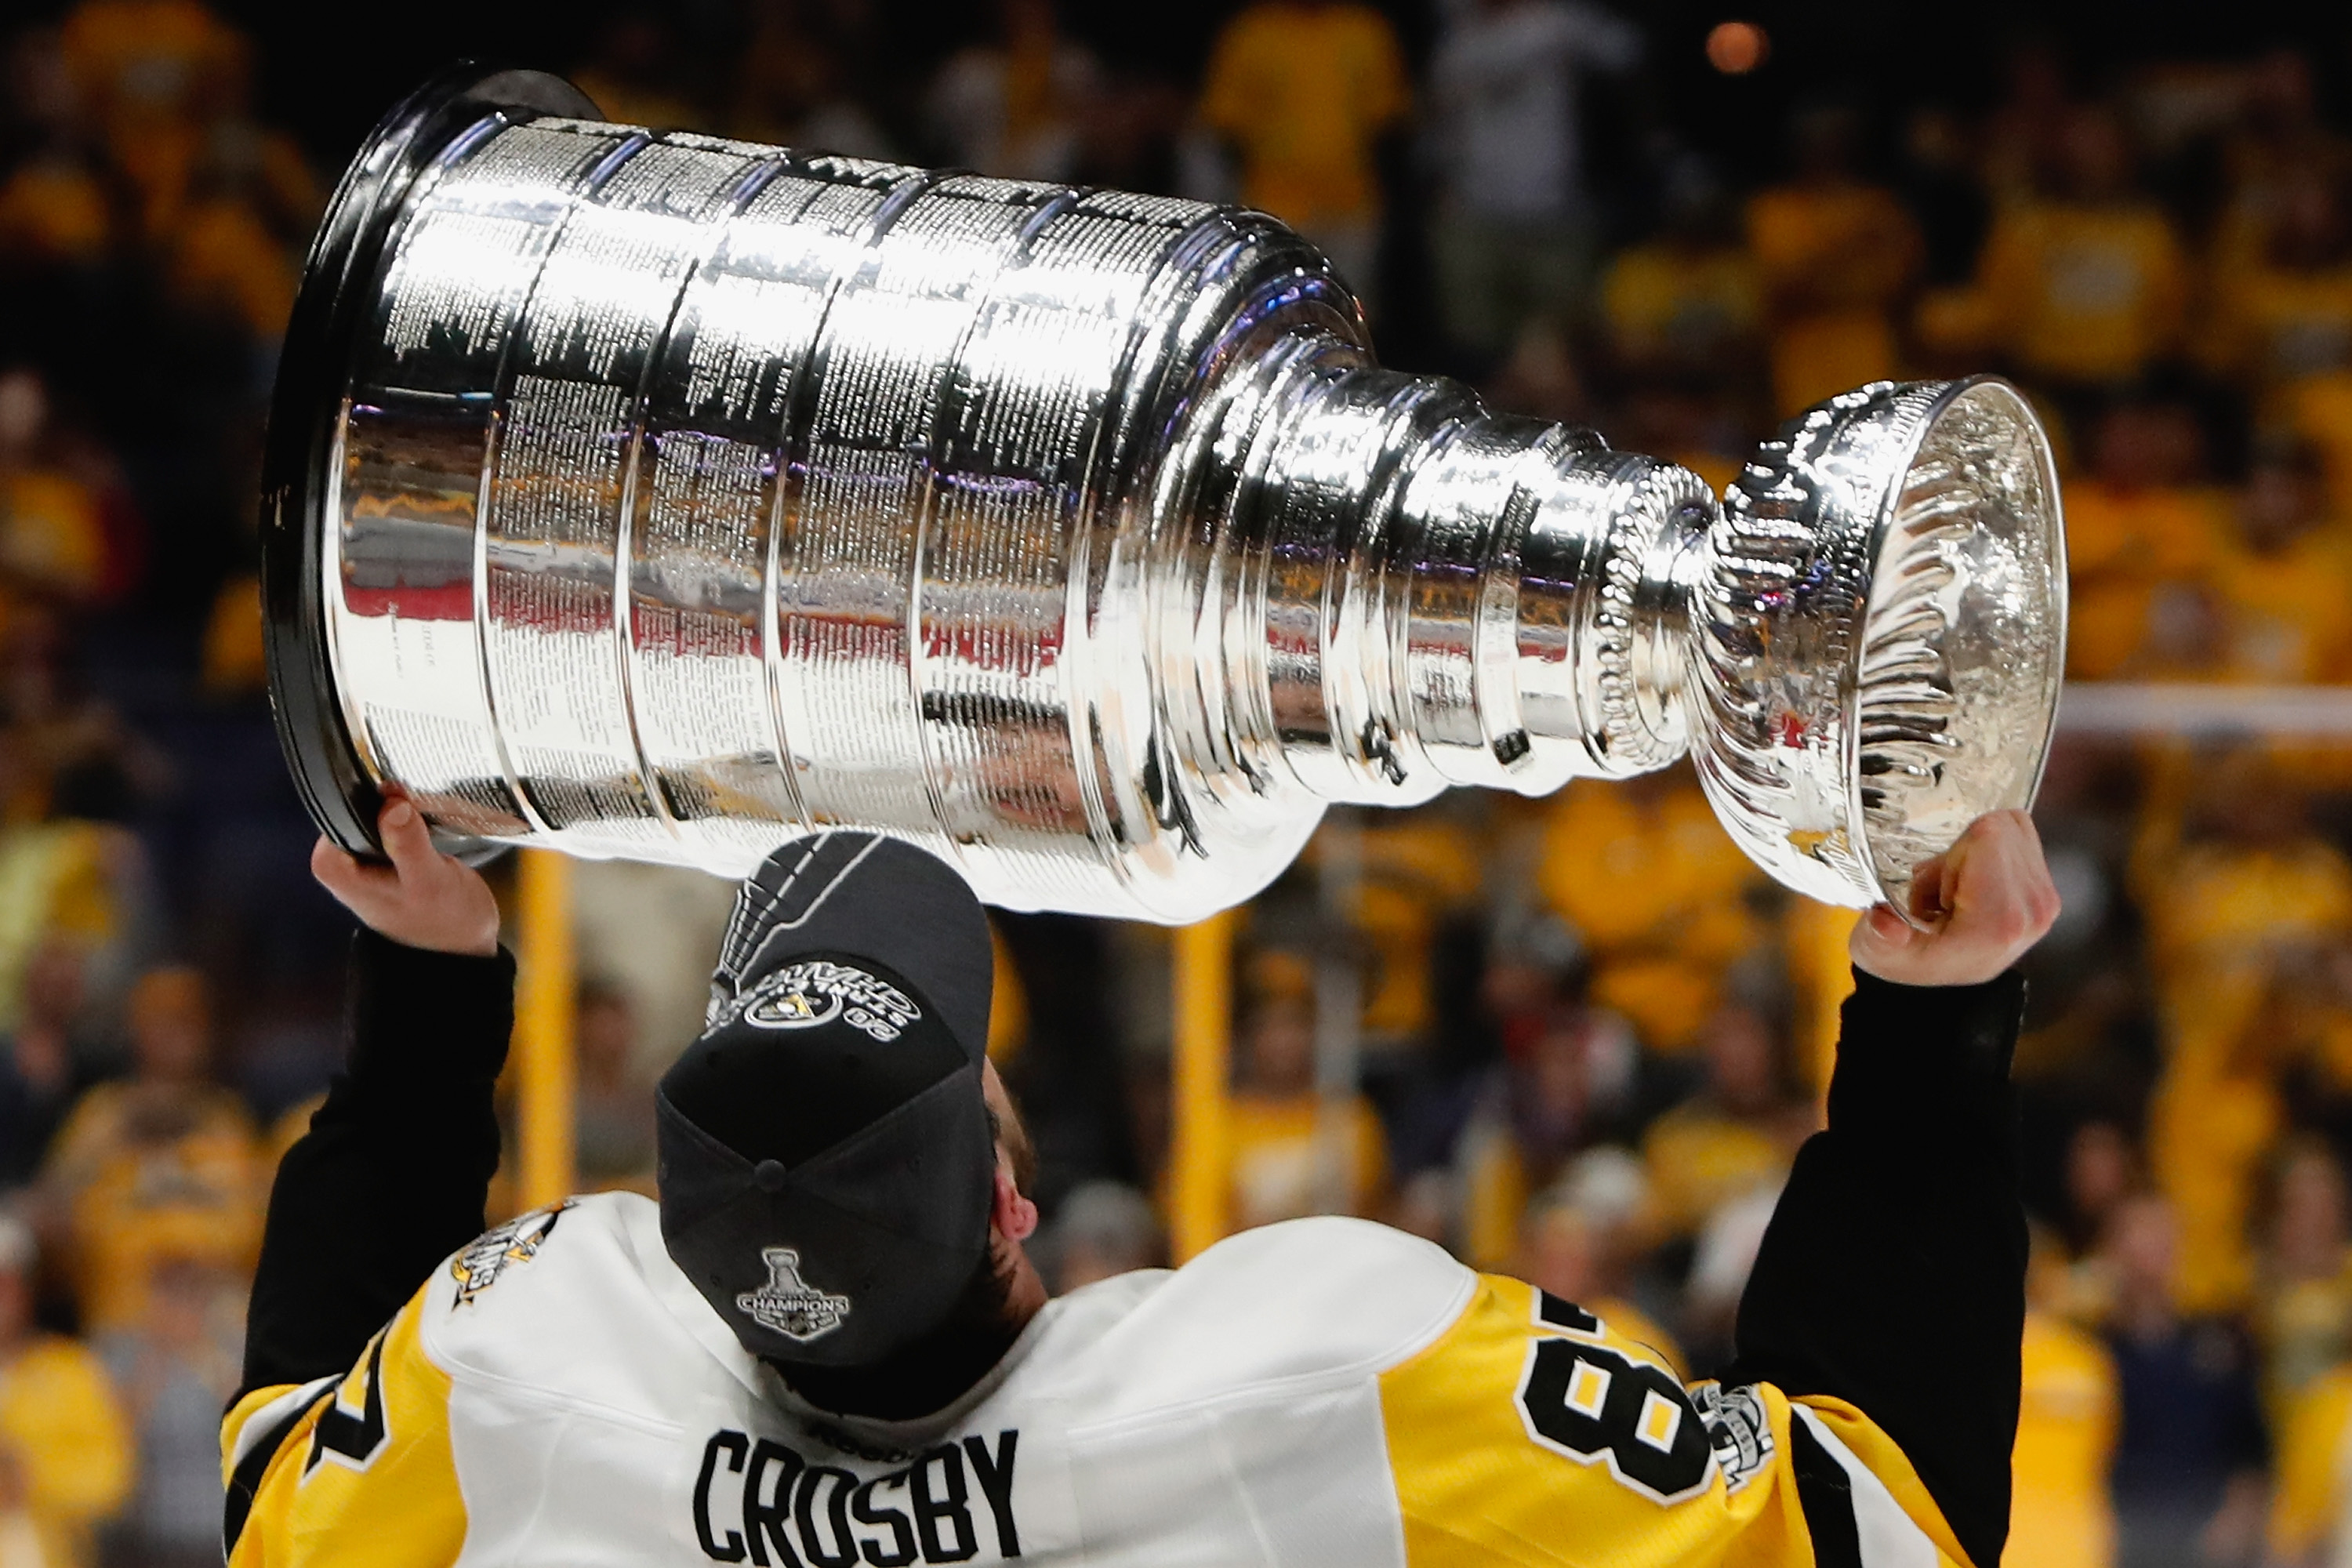 Penguins captain Sidney Crosby wins Conn Smythe Trophy as playoff MVP